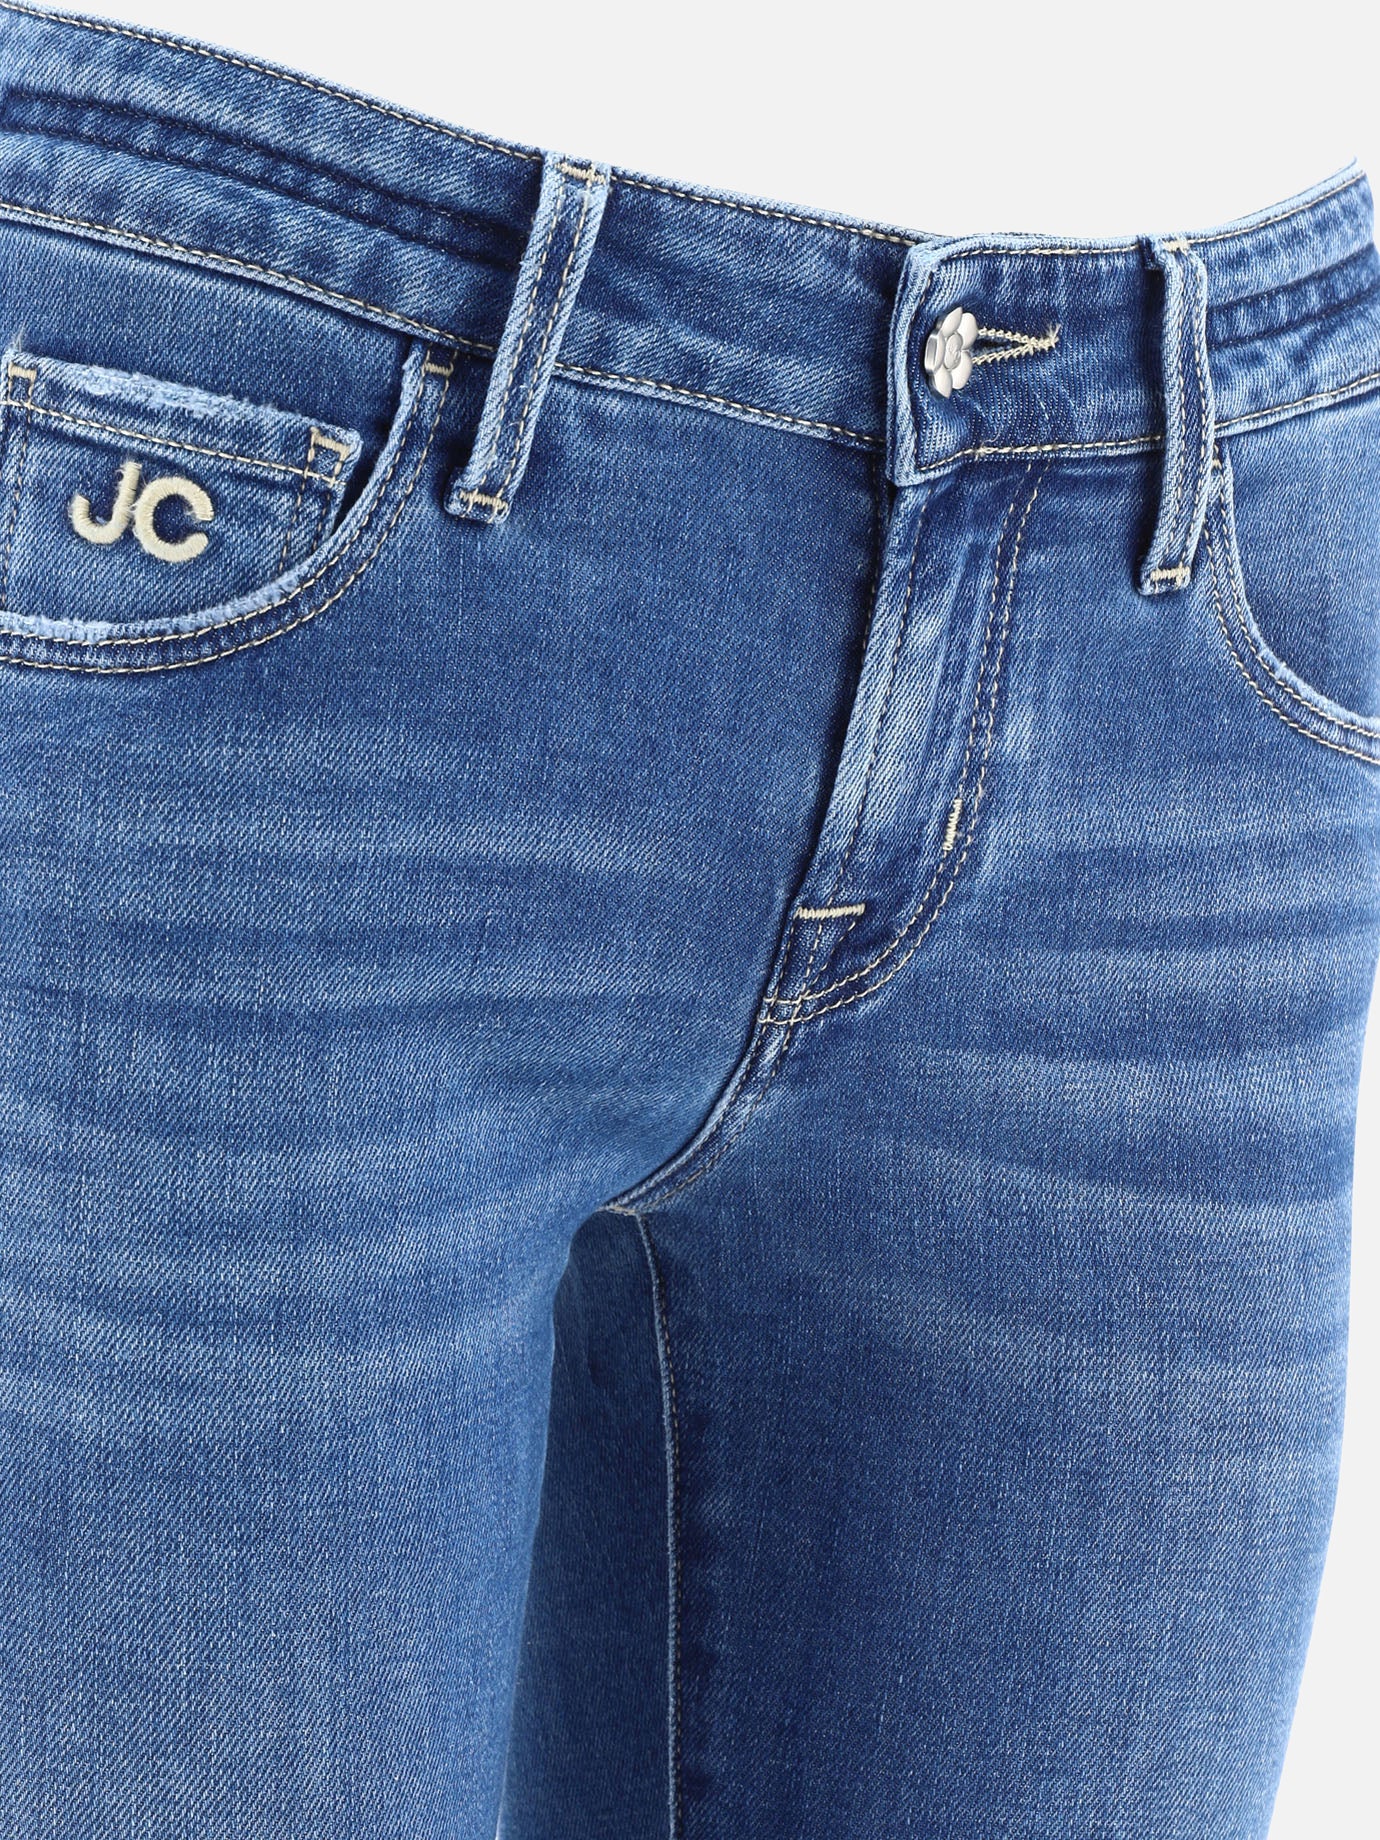 "Kim" jeans